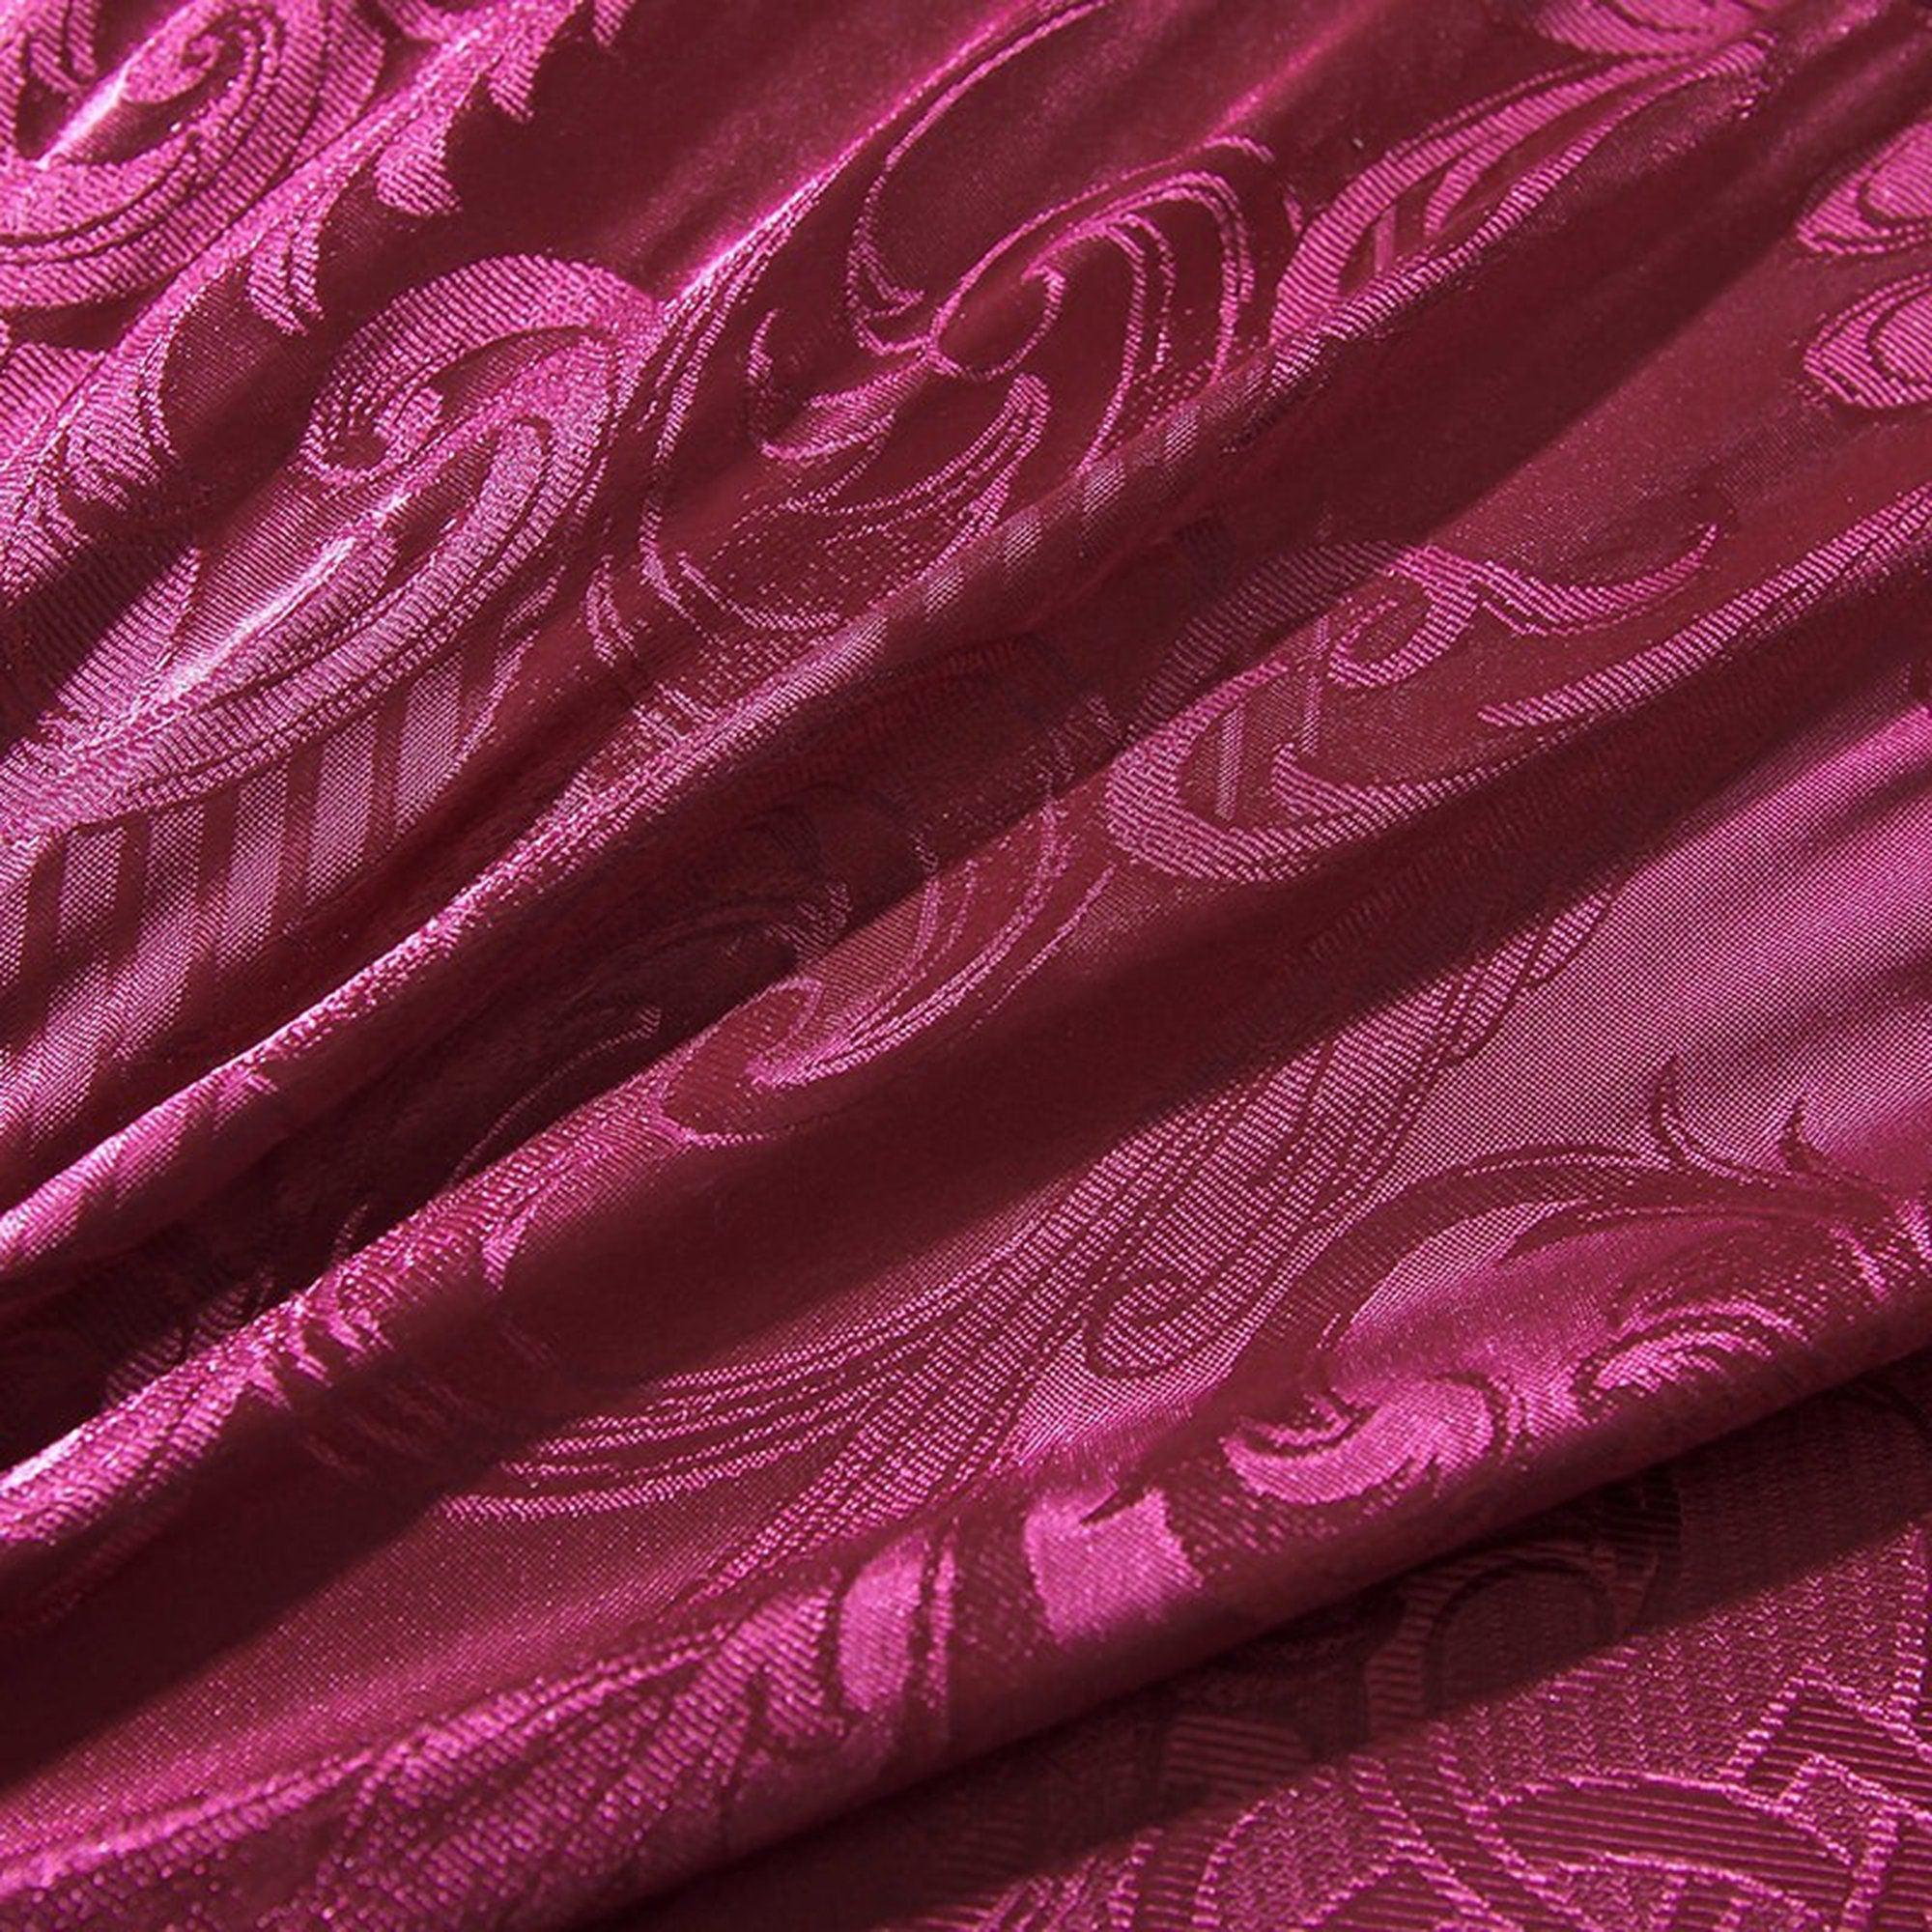 daintyduvet Burgundy Red Luxury Bedding made with Silky Jacquard Fabric, Damask Duvet Cover Set, Designer Bedding, Aesthetic Duvet King Queen Full Twin